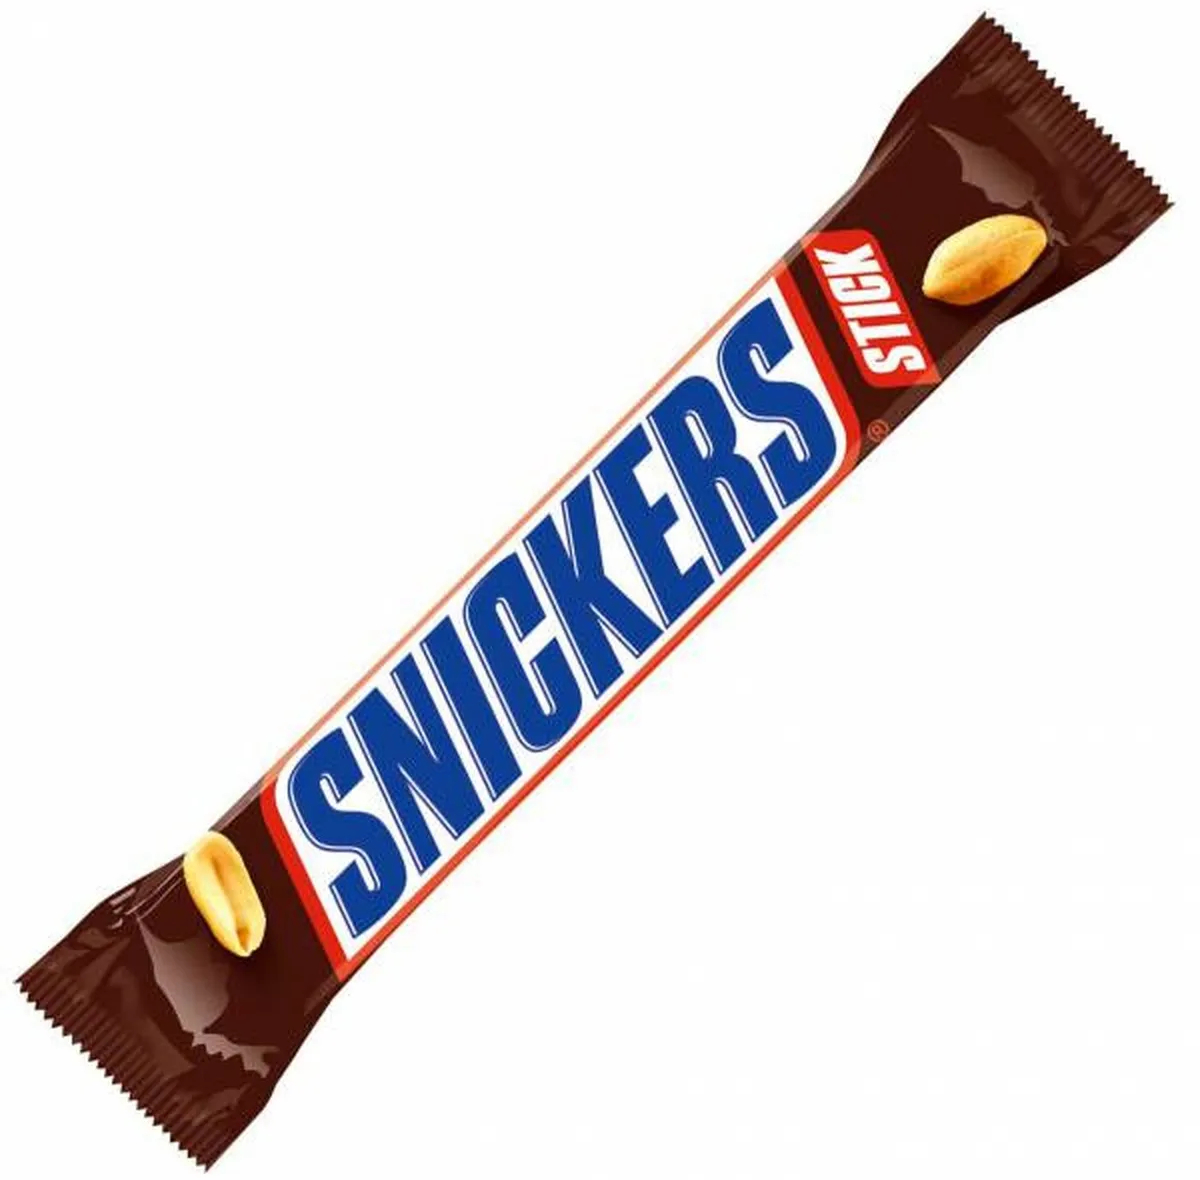 Шоколадный батончик Snickers Stick, 20 г